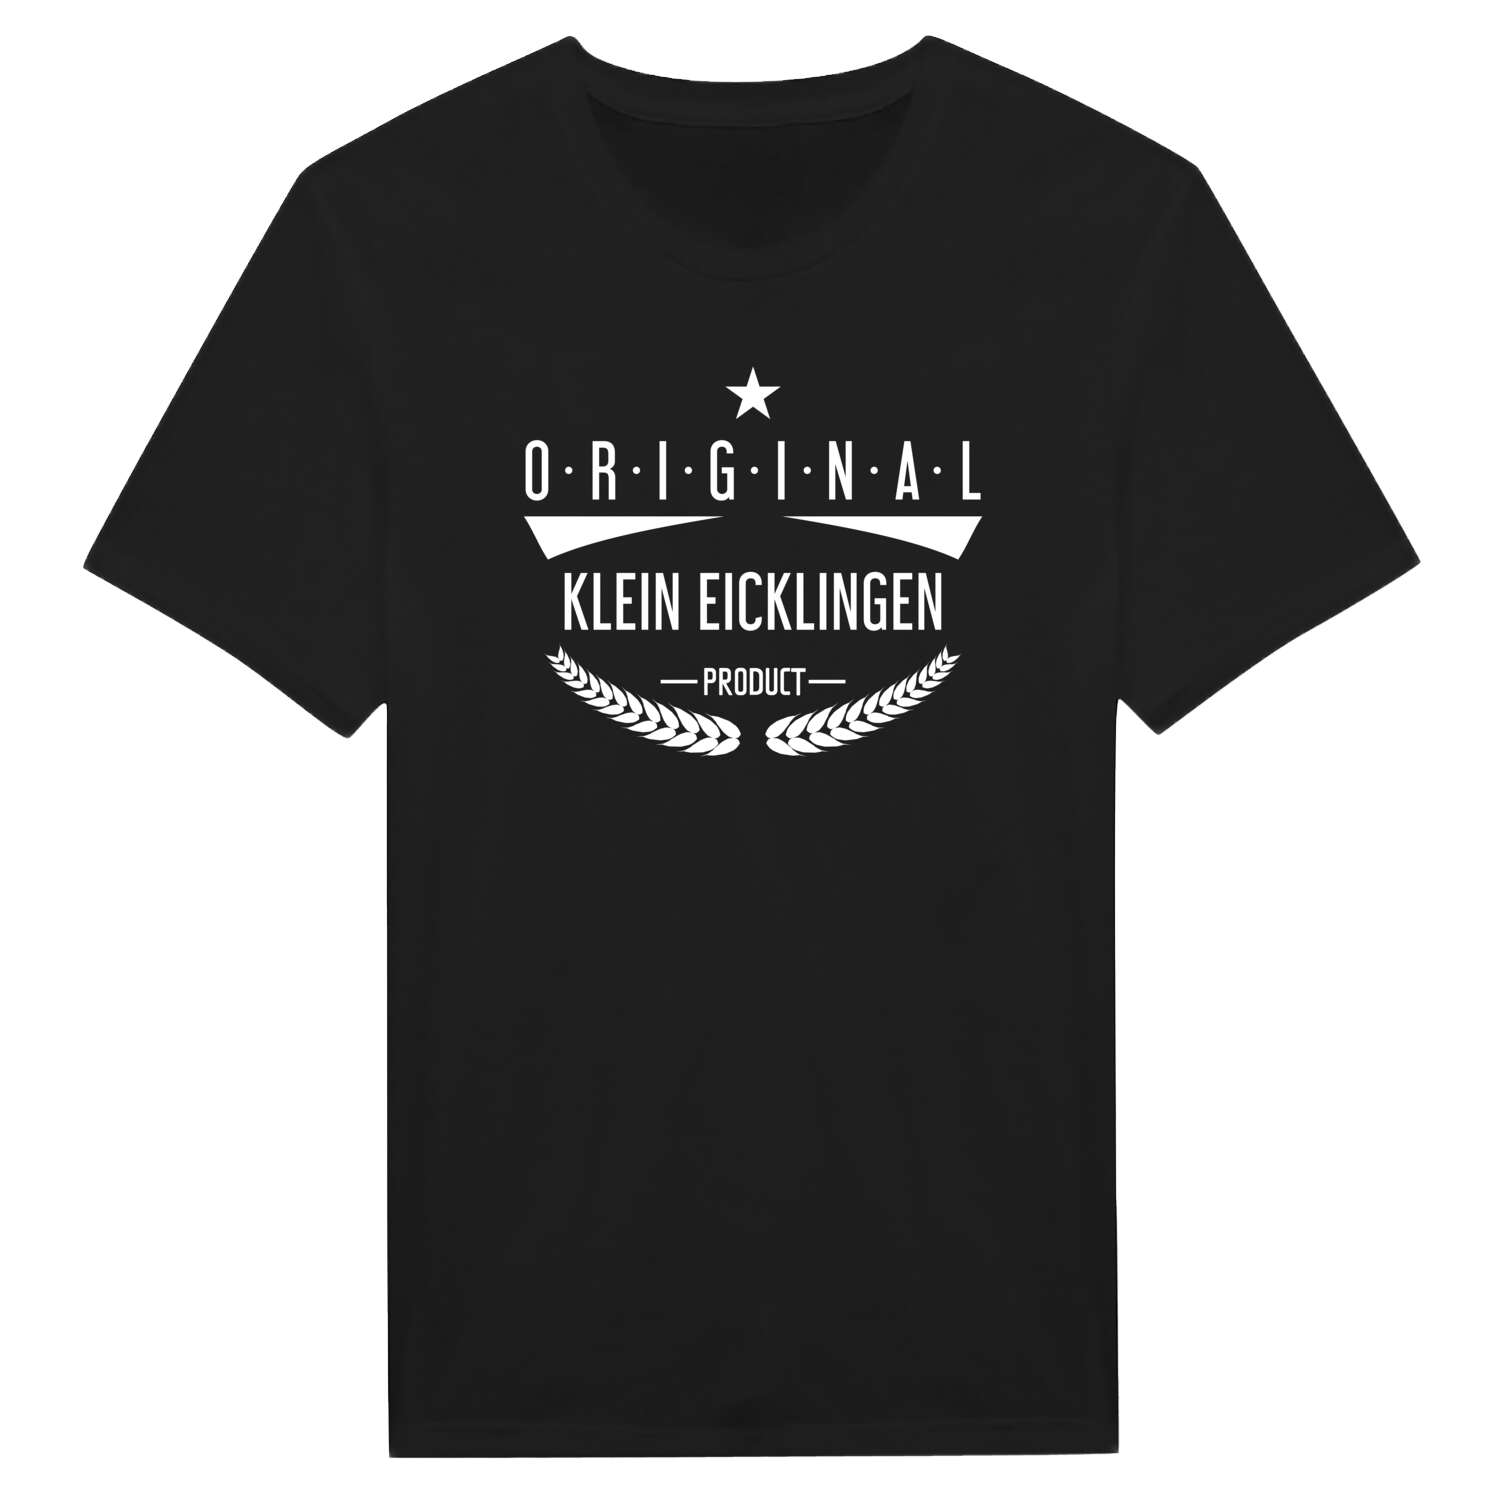 Klein Eicklingen T-Shirt »Original Product«